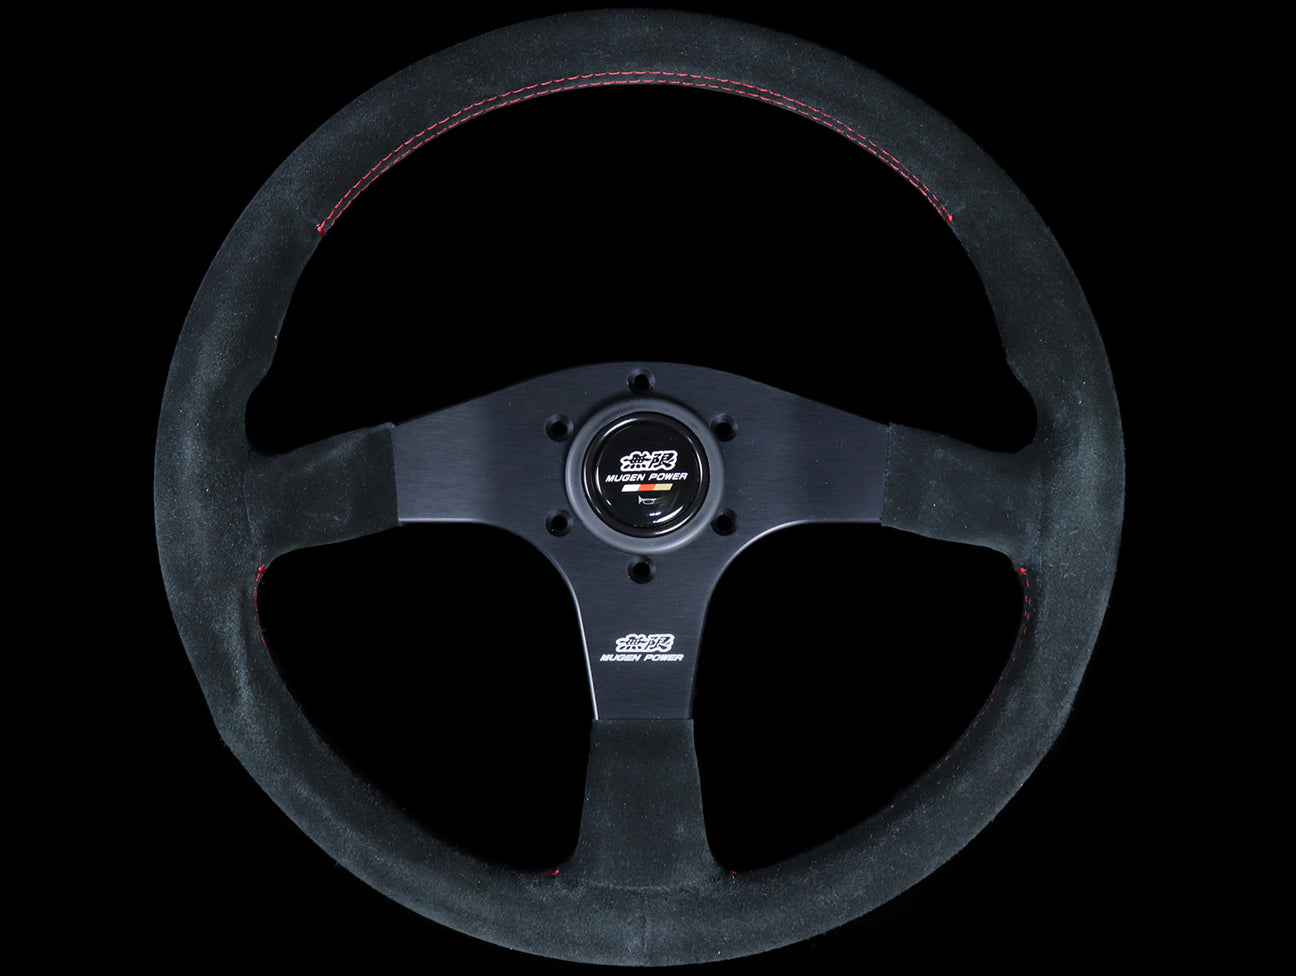 Mugen 350mm Racing 3 Steering Wheel - Black Suede / Red Stitch